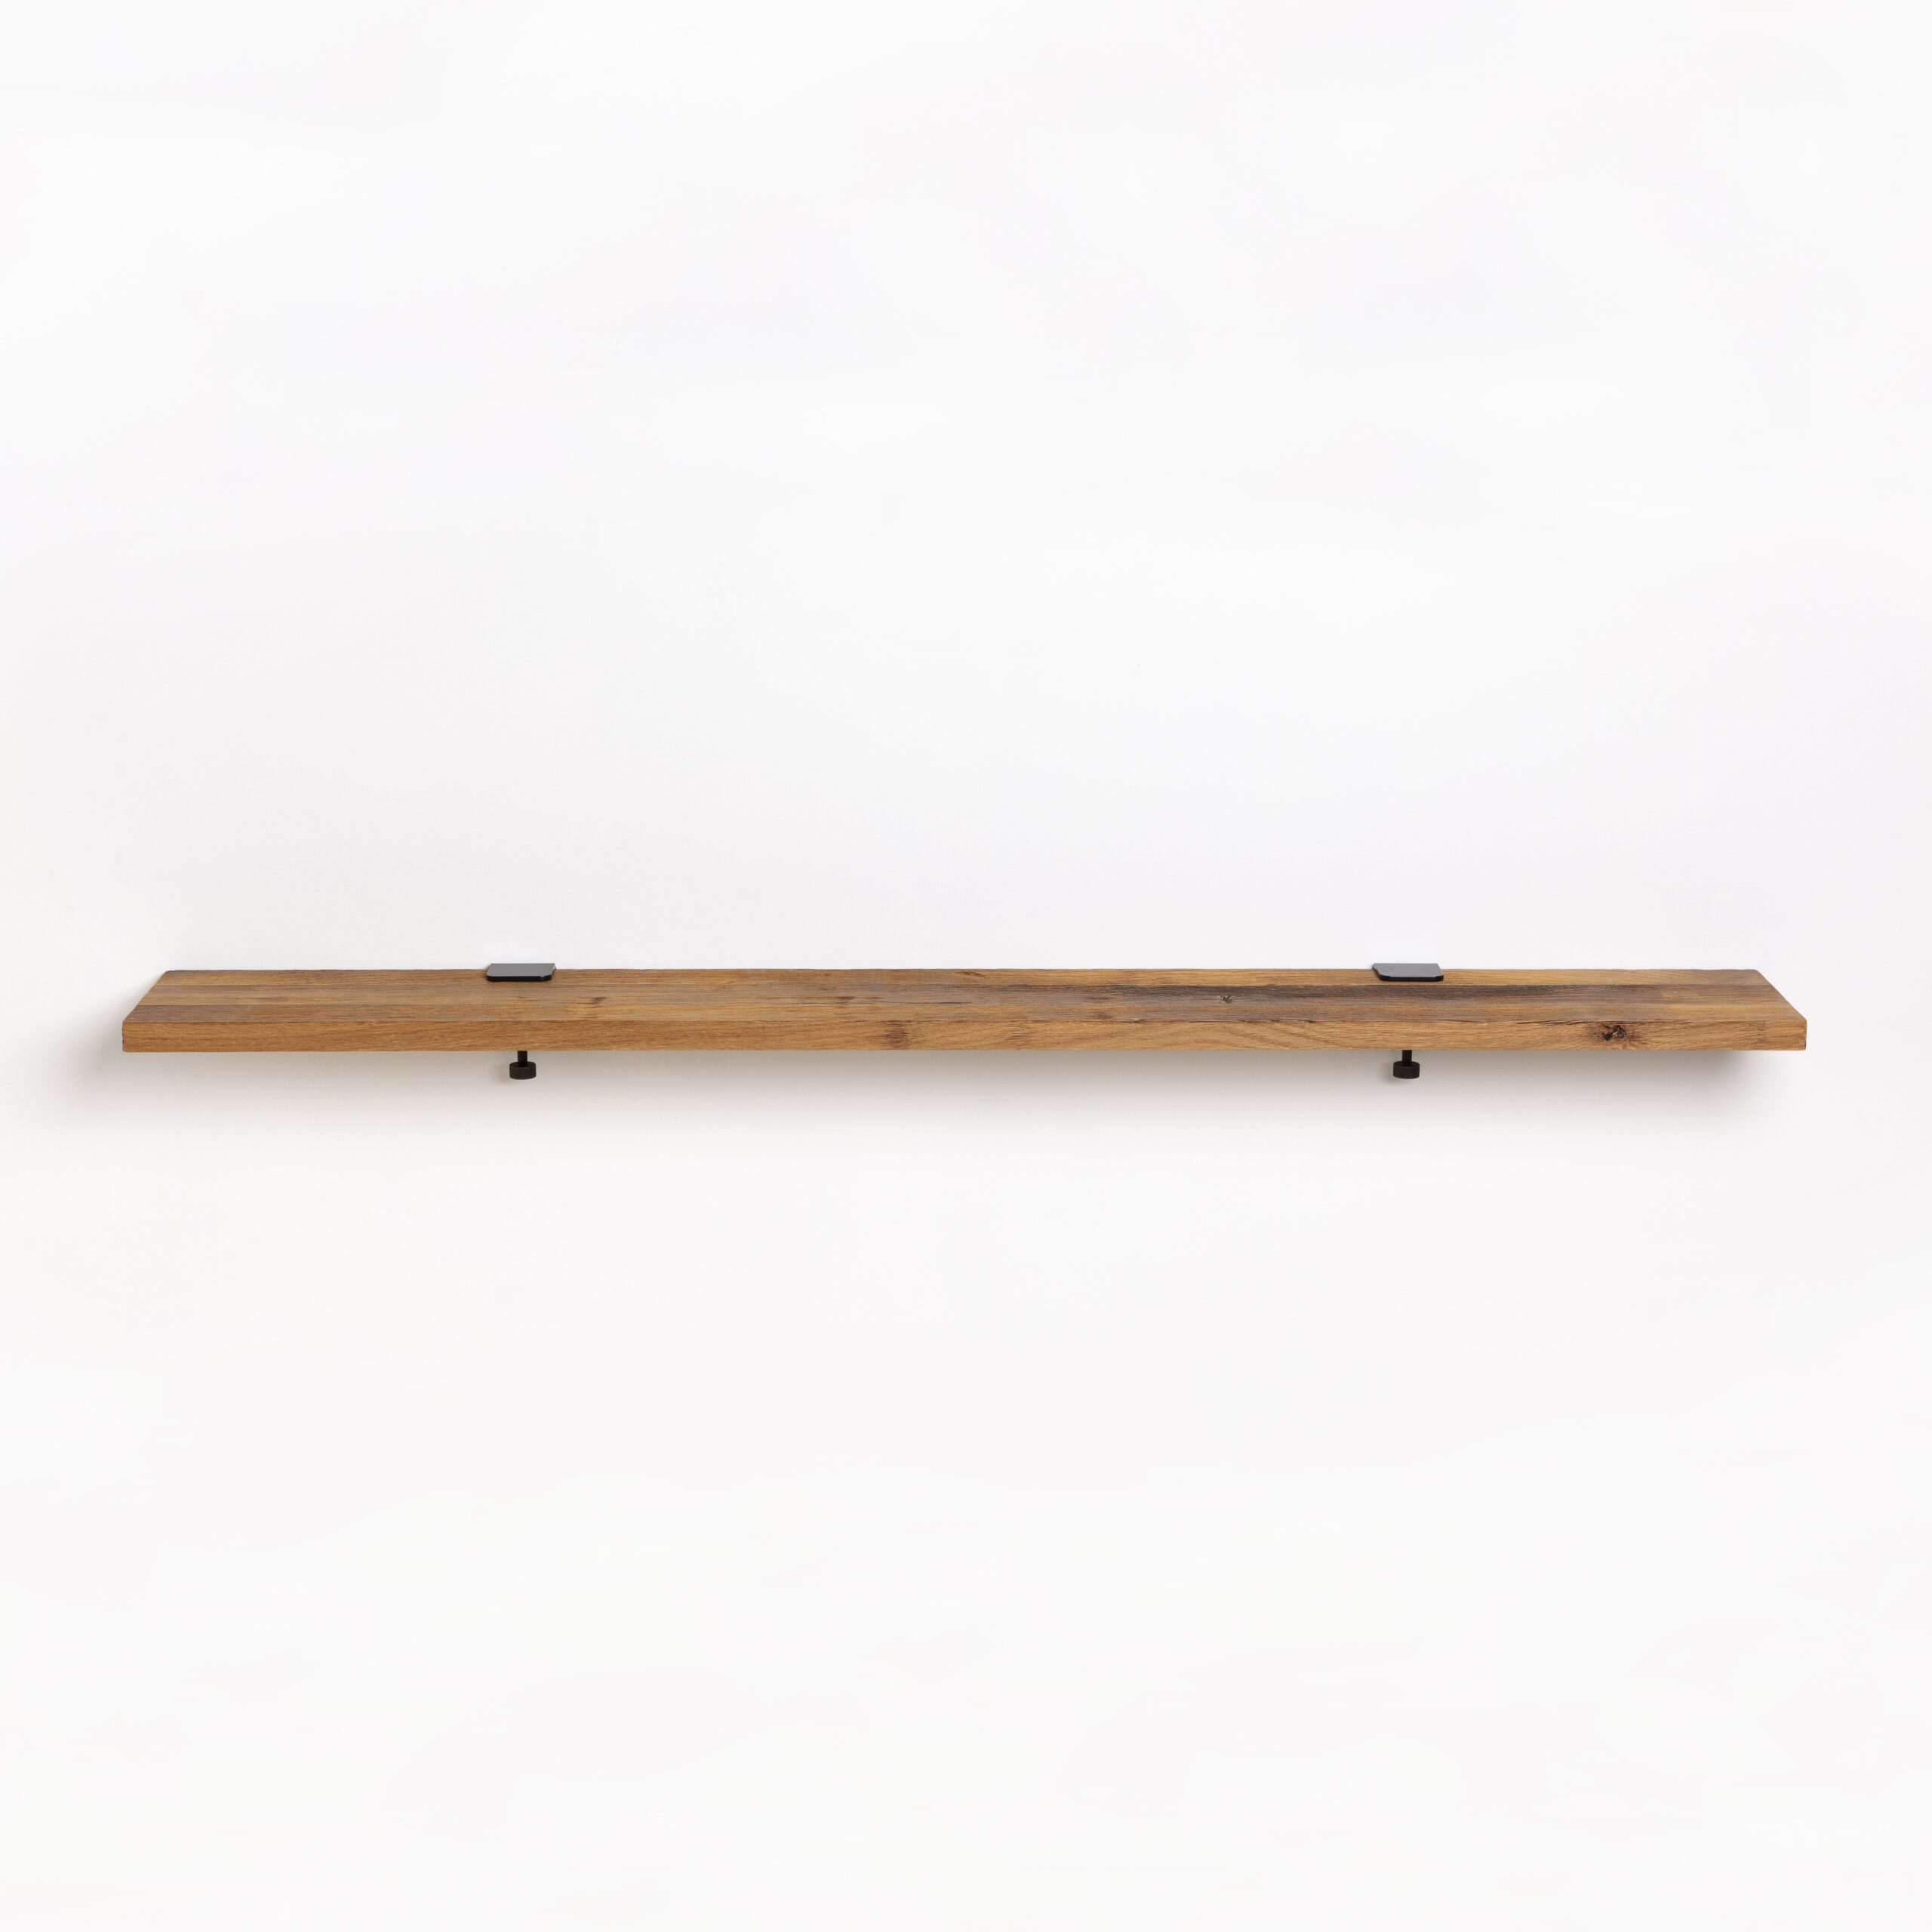 Reclaimed wood wall shelf - 60 to 150cm